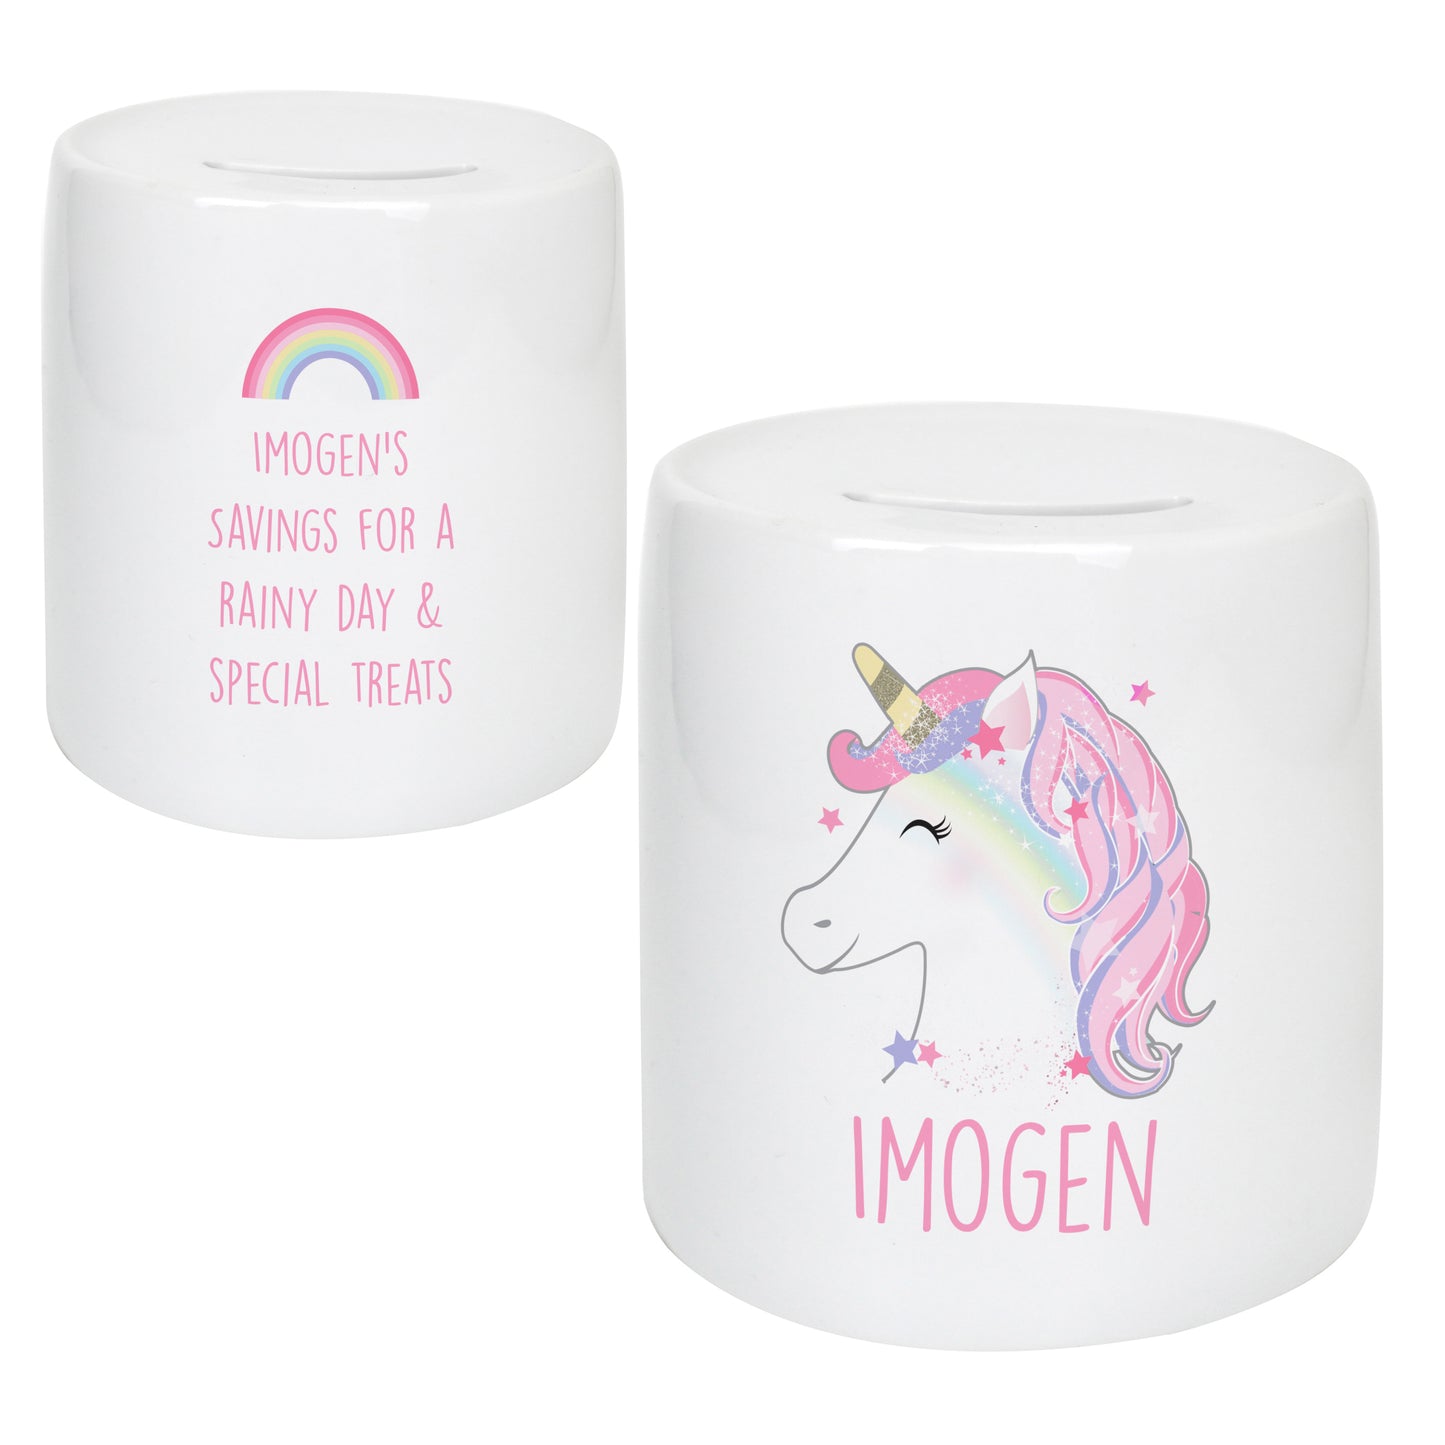 Personalised Unicorn Ceramic Money Box